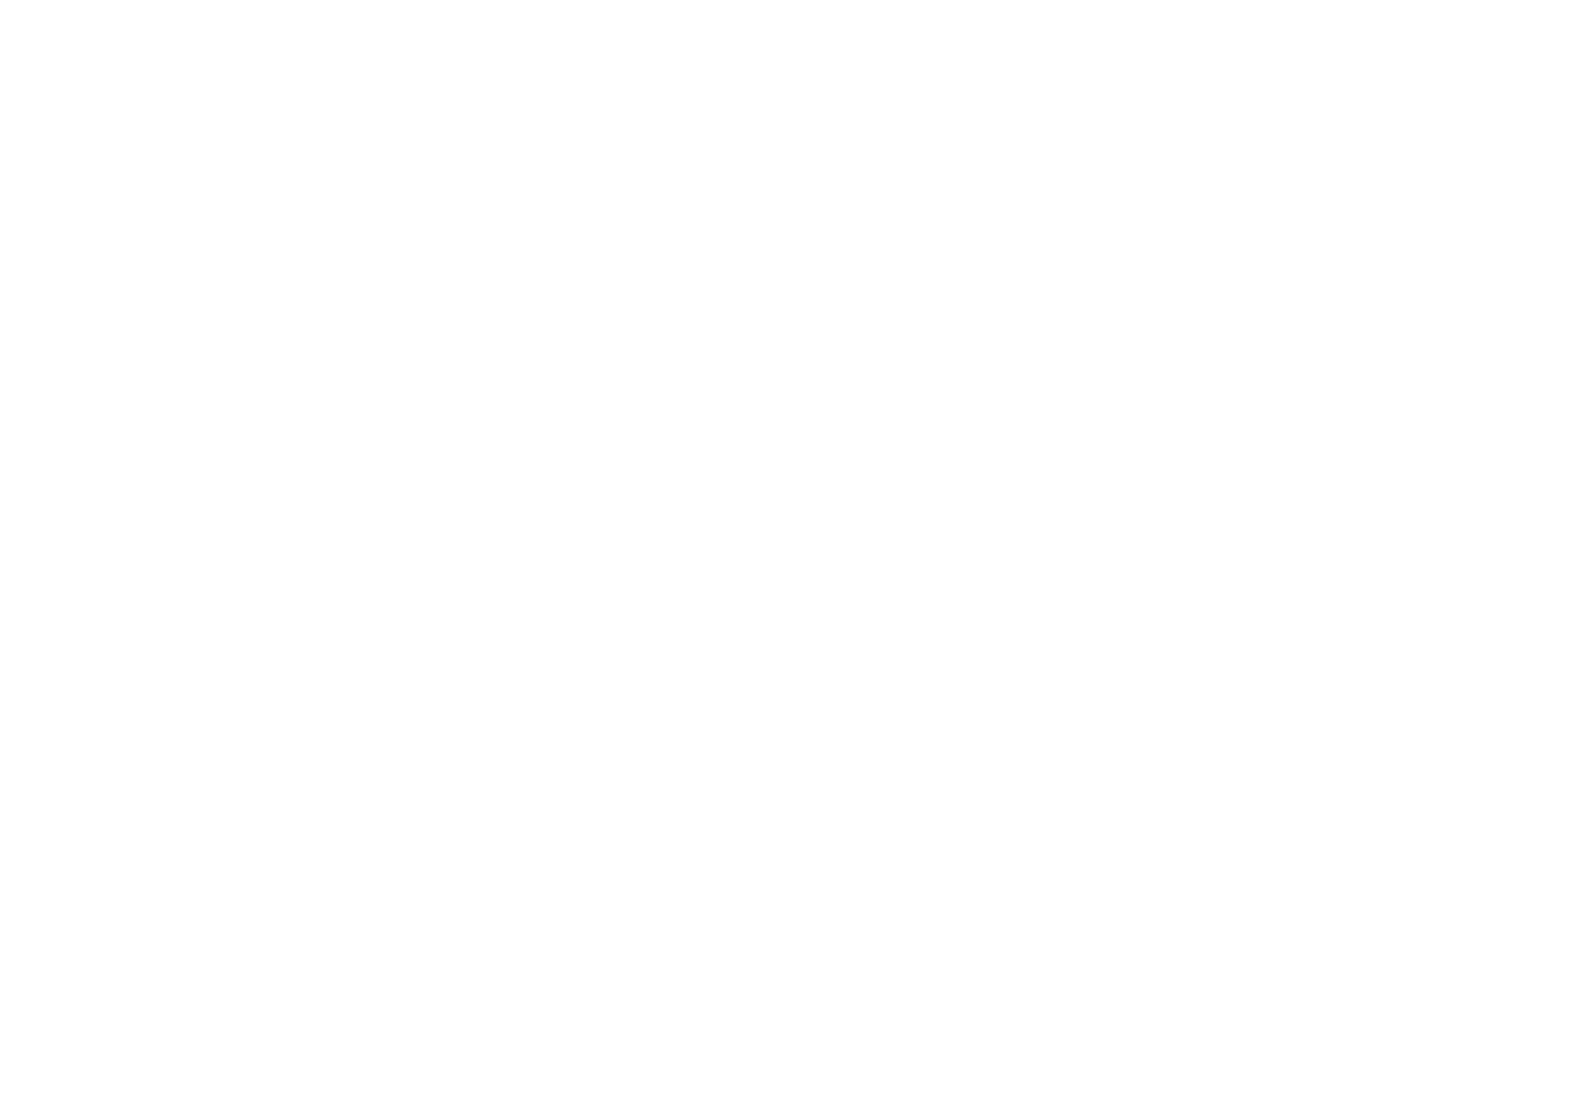 3D Explainer Video Animation